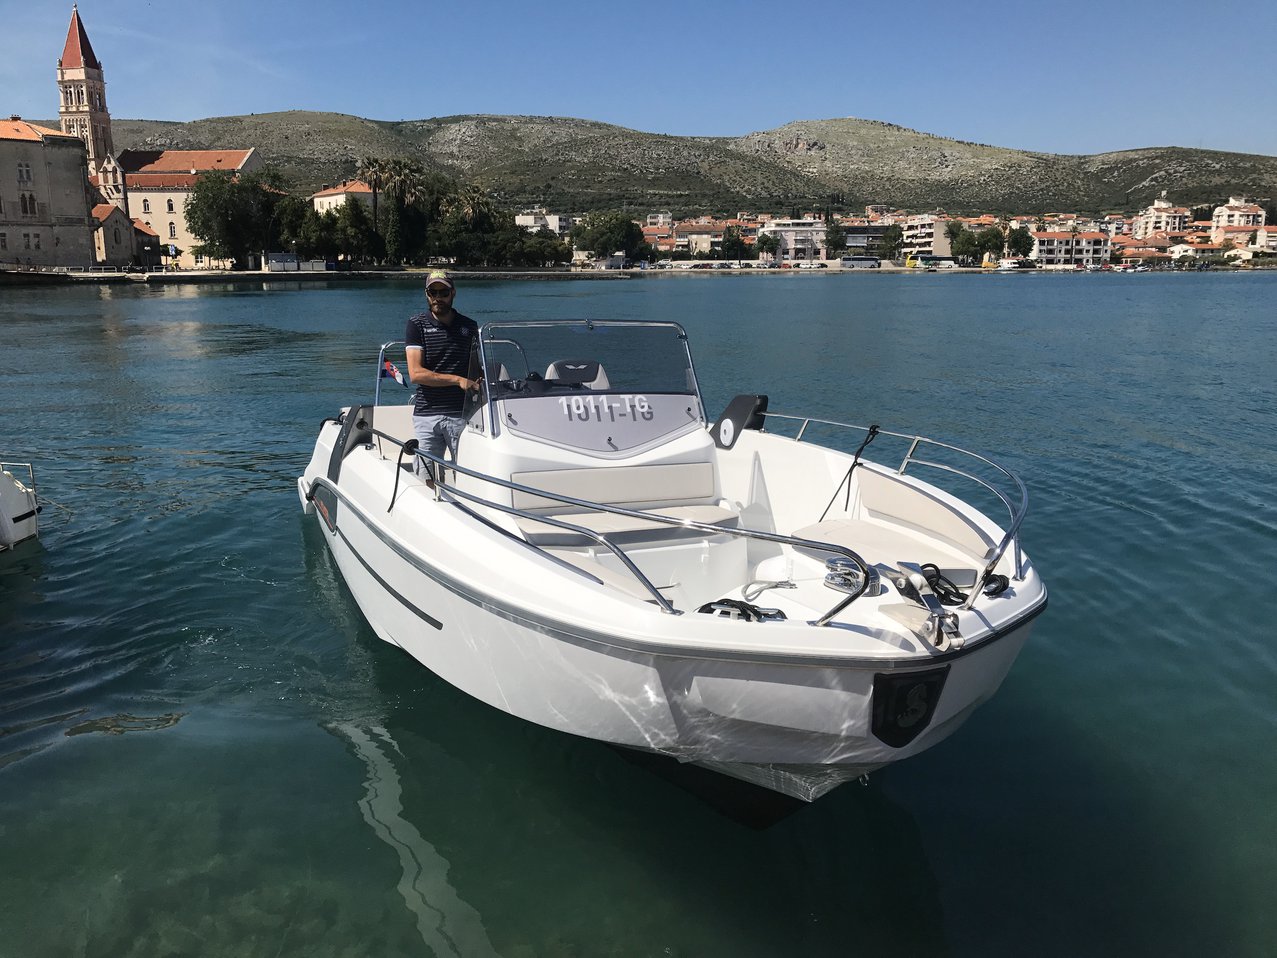 Motorni čoln Beneteau Flyer 7.7 Space Deck Split regija, Hrvaška 3 thumbnail